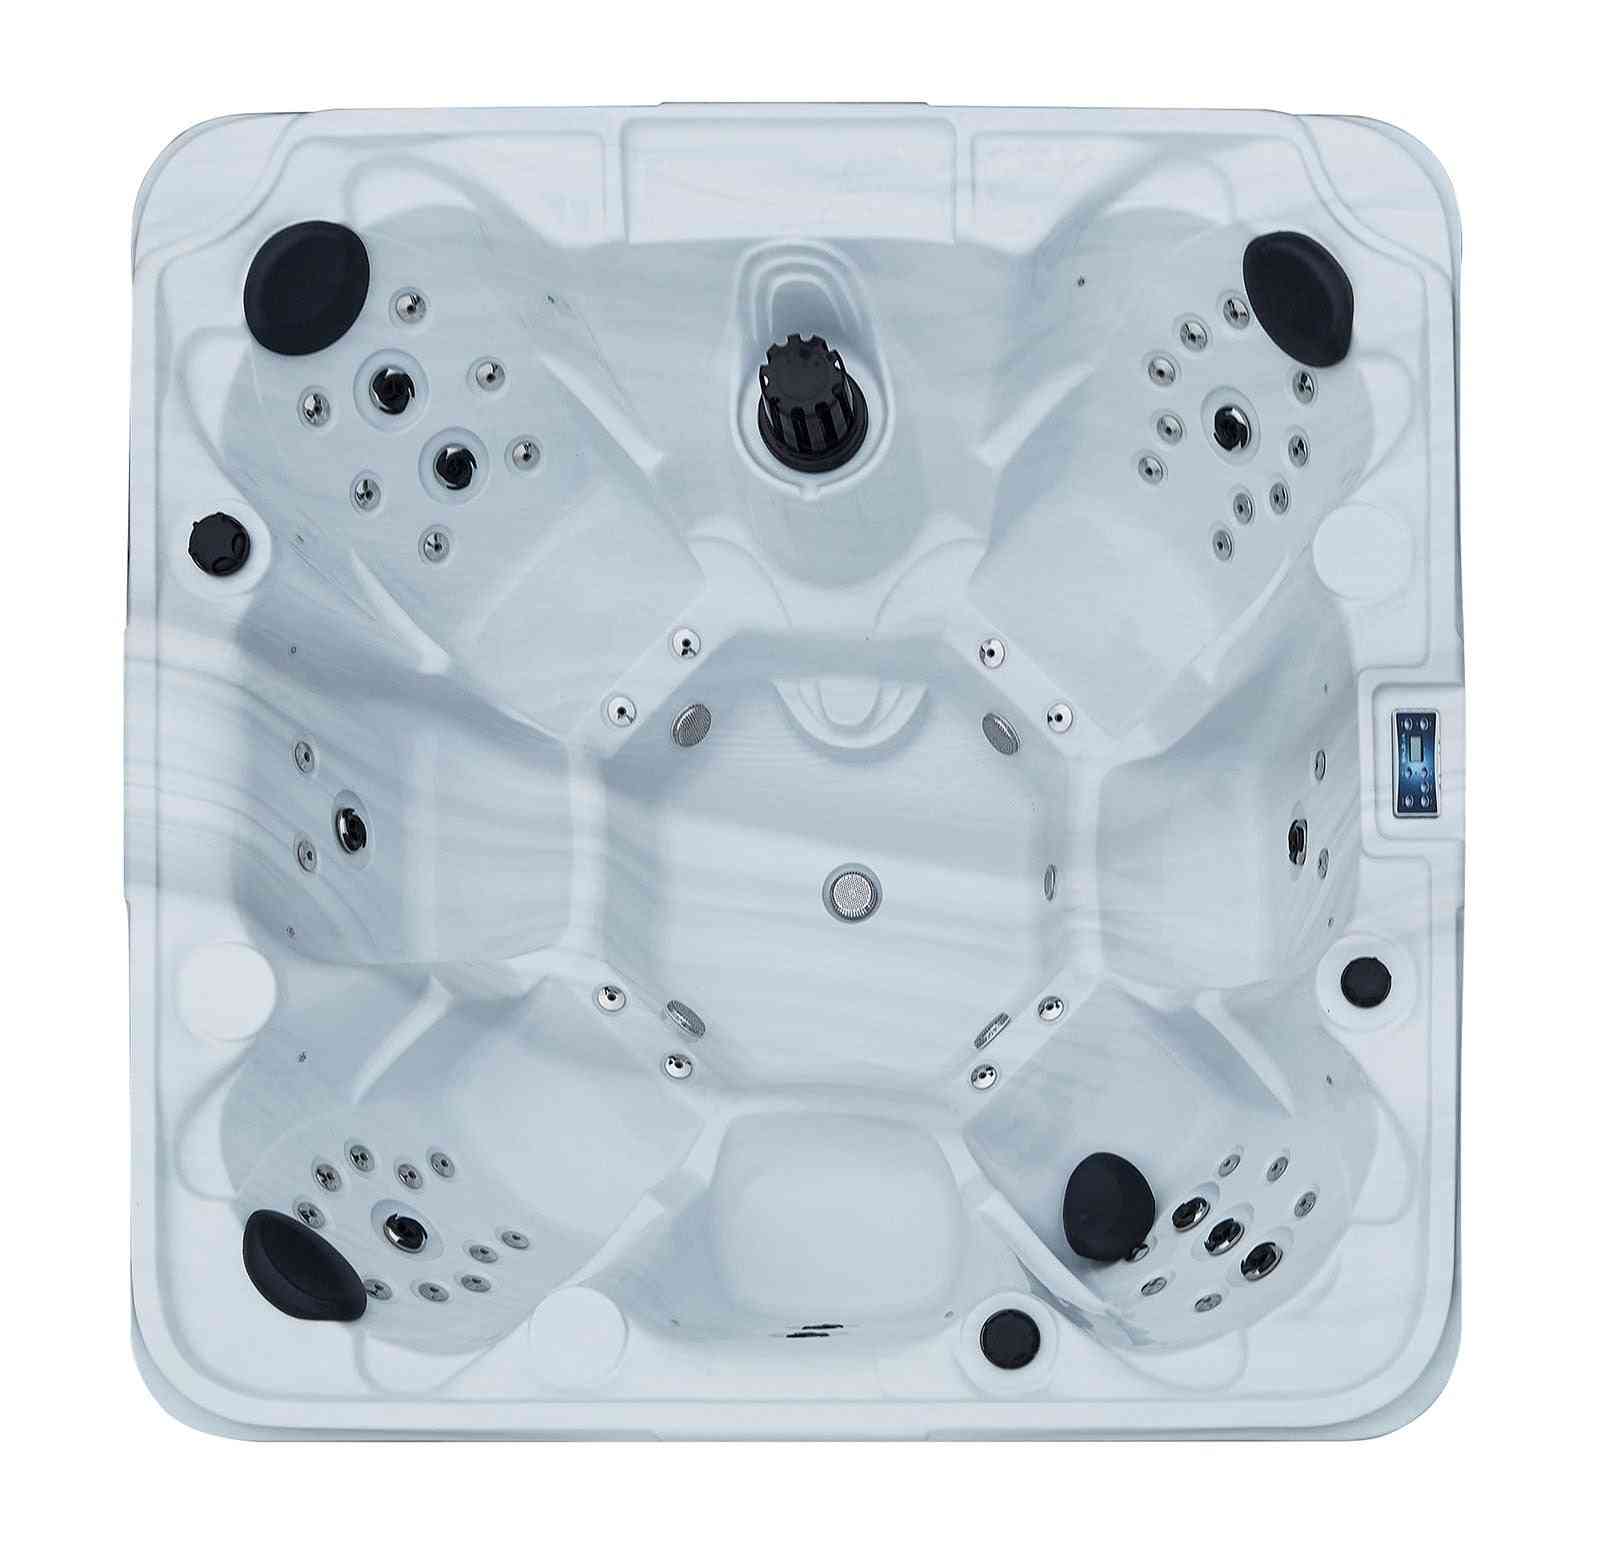 Fashionable Design Spa Whirlpool Massage Tub With Balboa System